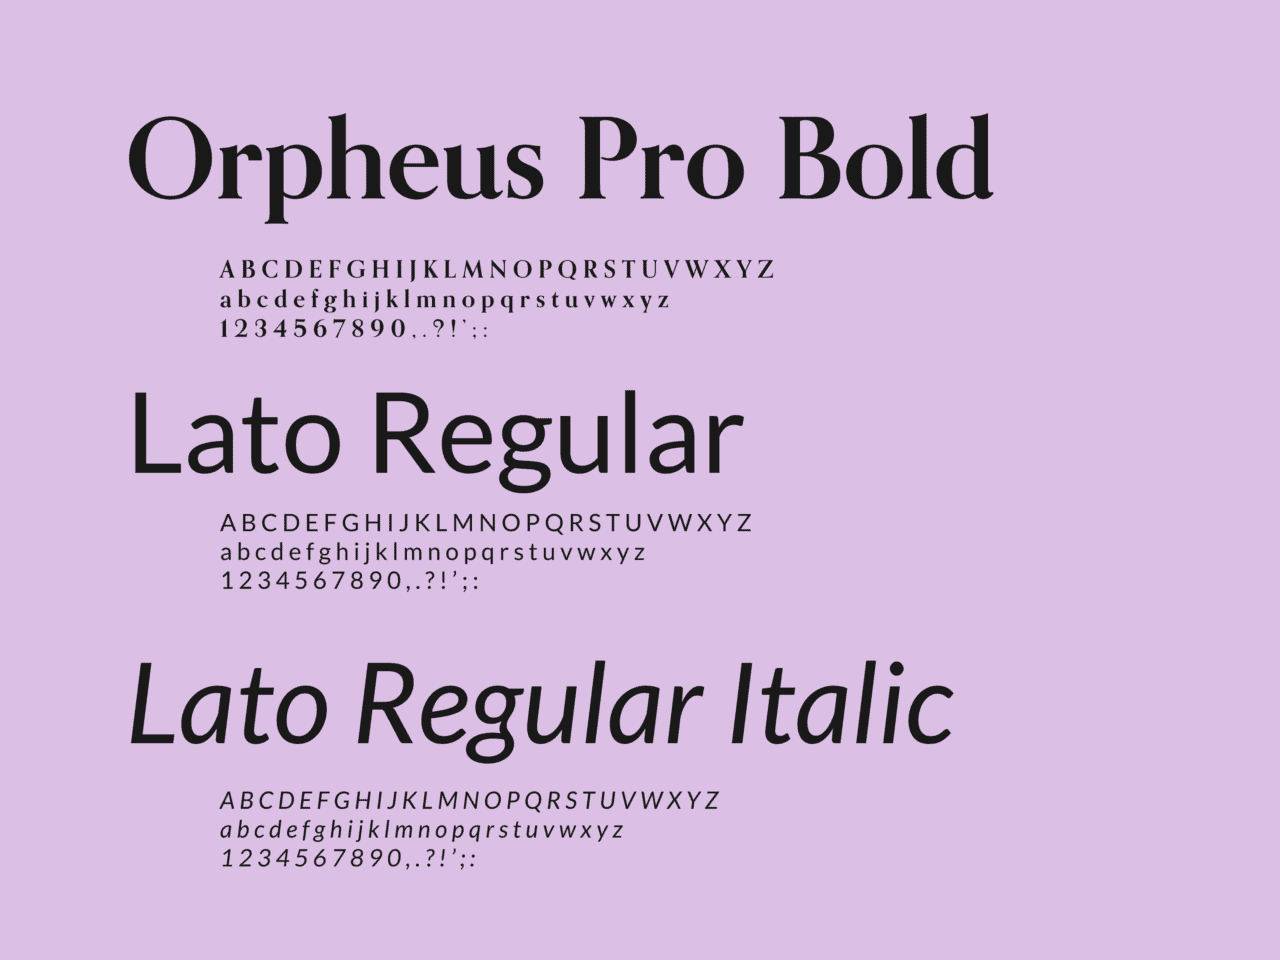 Black text of Orpheus Pro Bold, Lato Regular and Lato Regular Italic fonts on a pale purple background